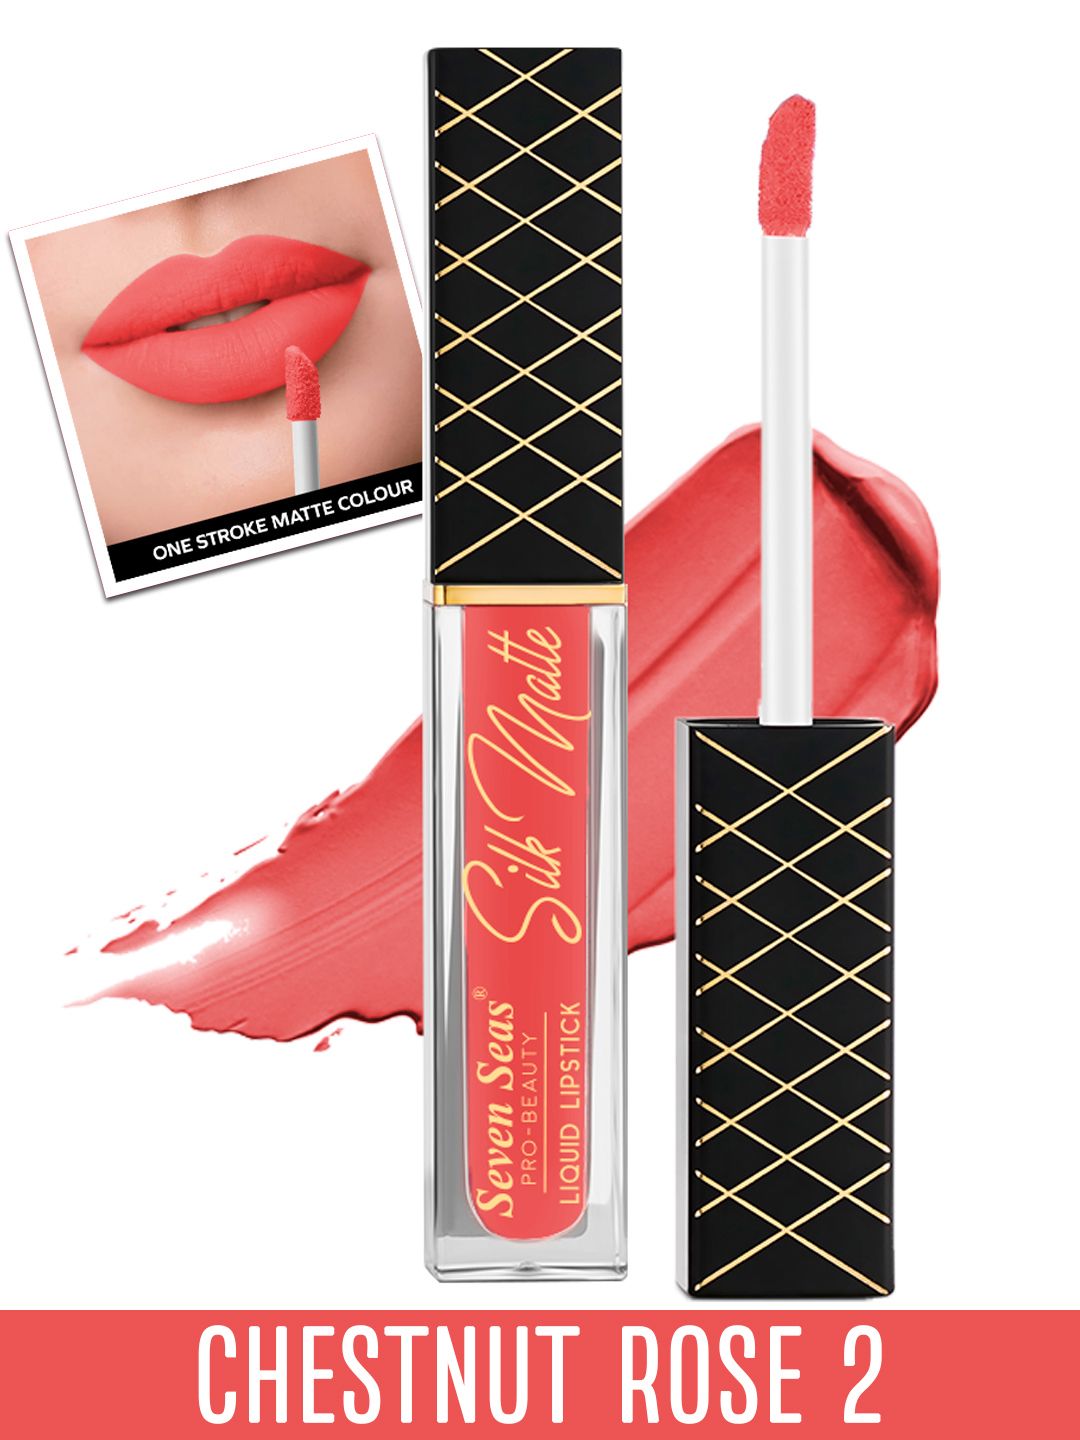 Seven Seas Transfer Proof Silk Matte Liquid Lipstick 8 g - Chestnut Rose 2 Price in India